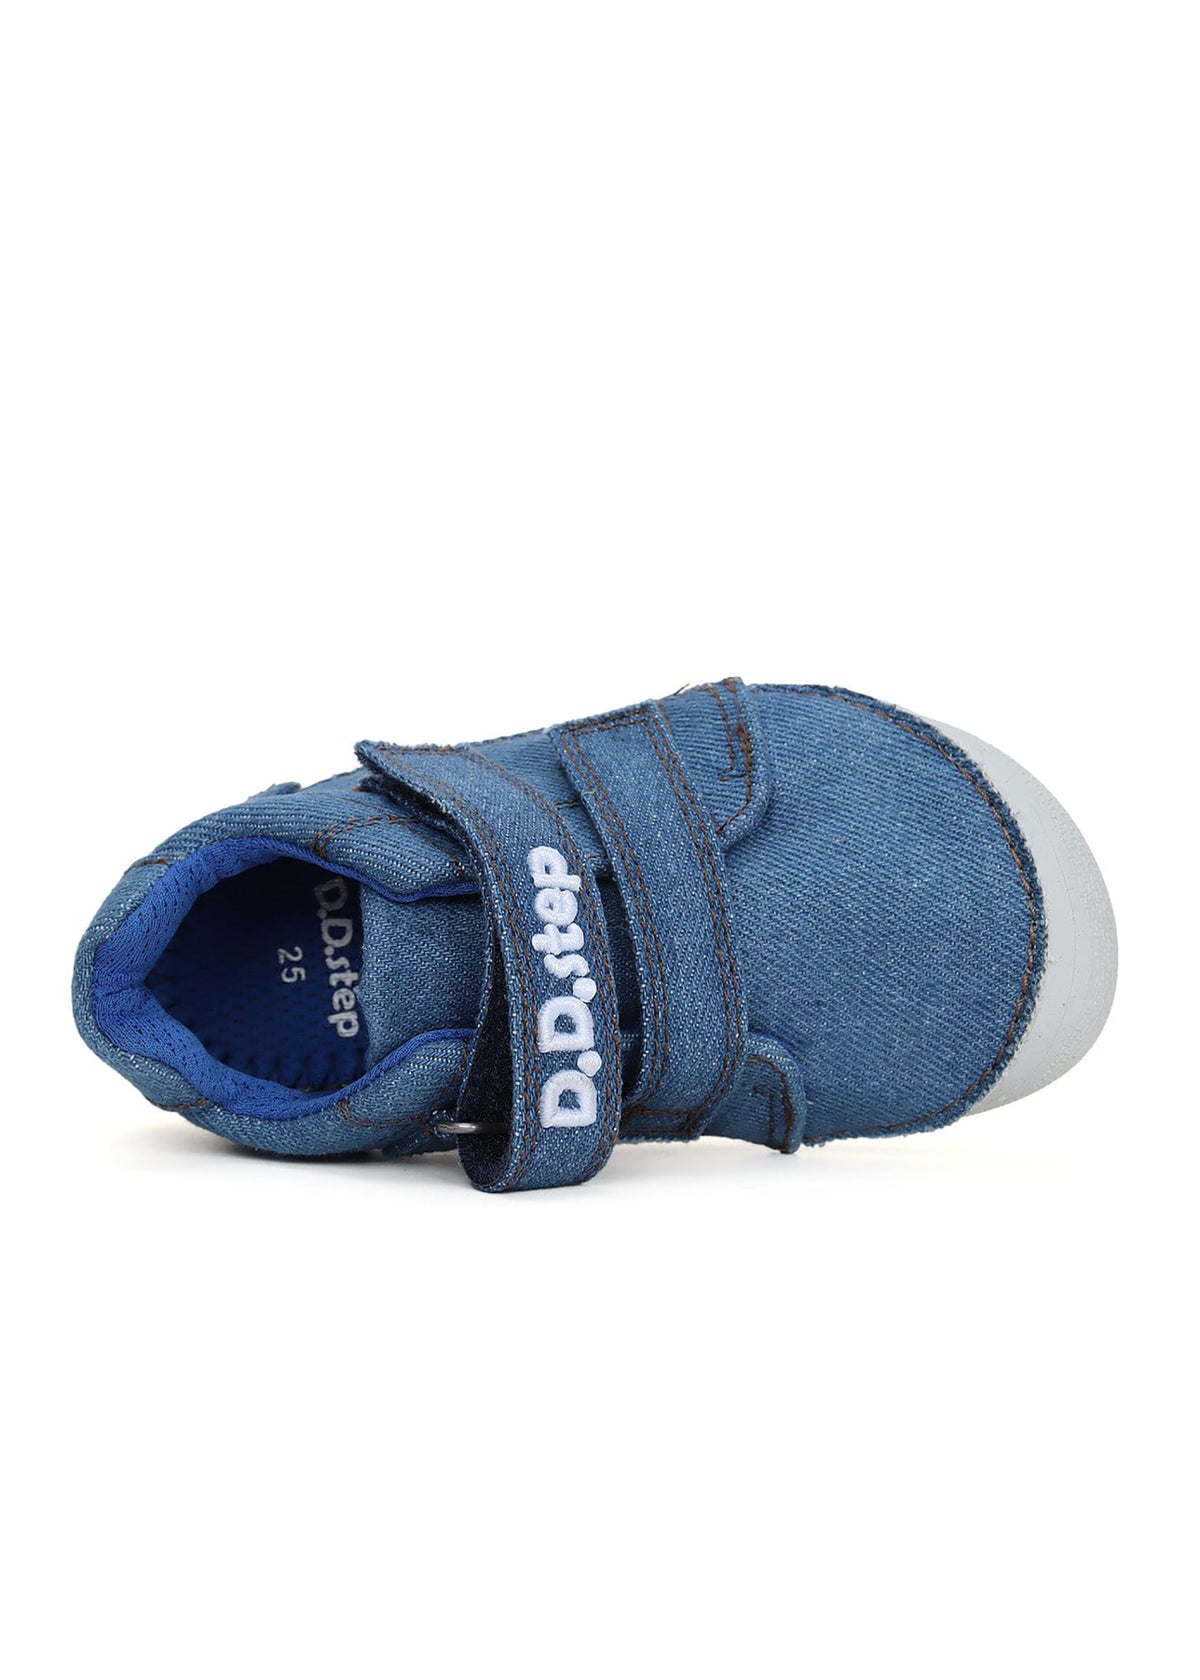 Children's barefoot sneakers - Denim Blue Canvas